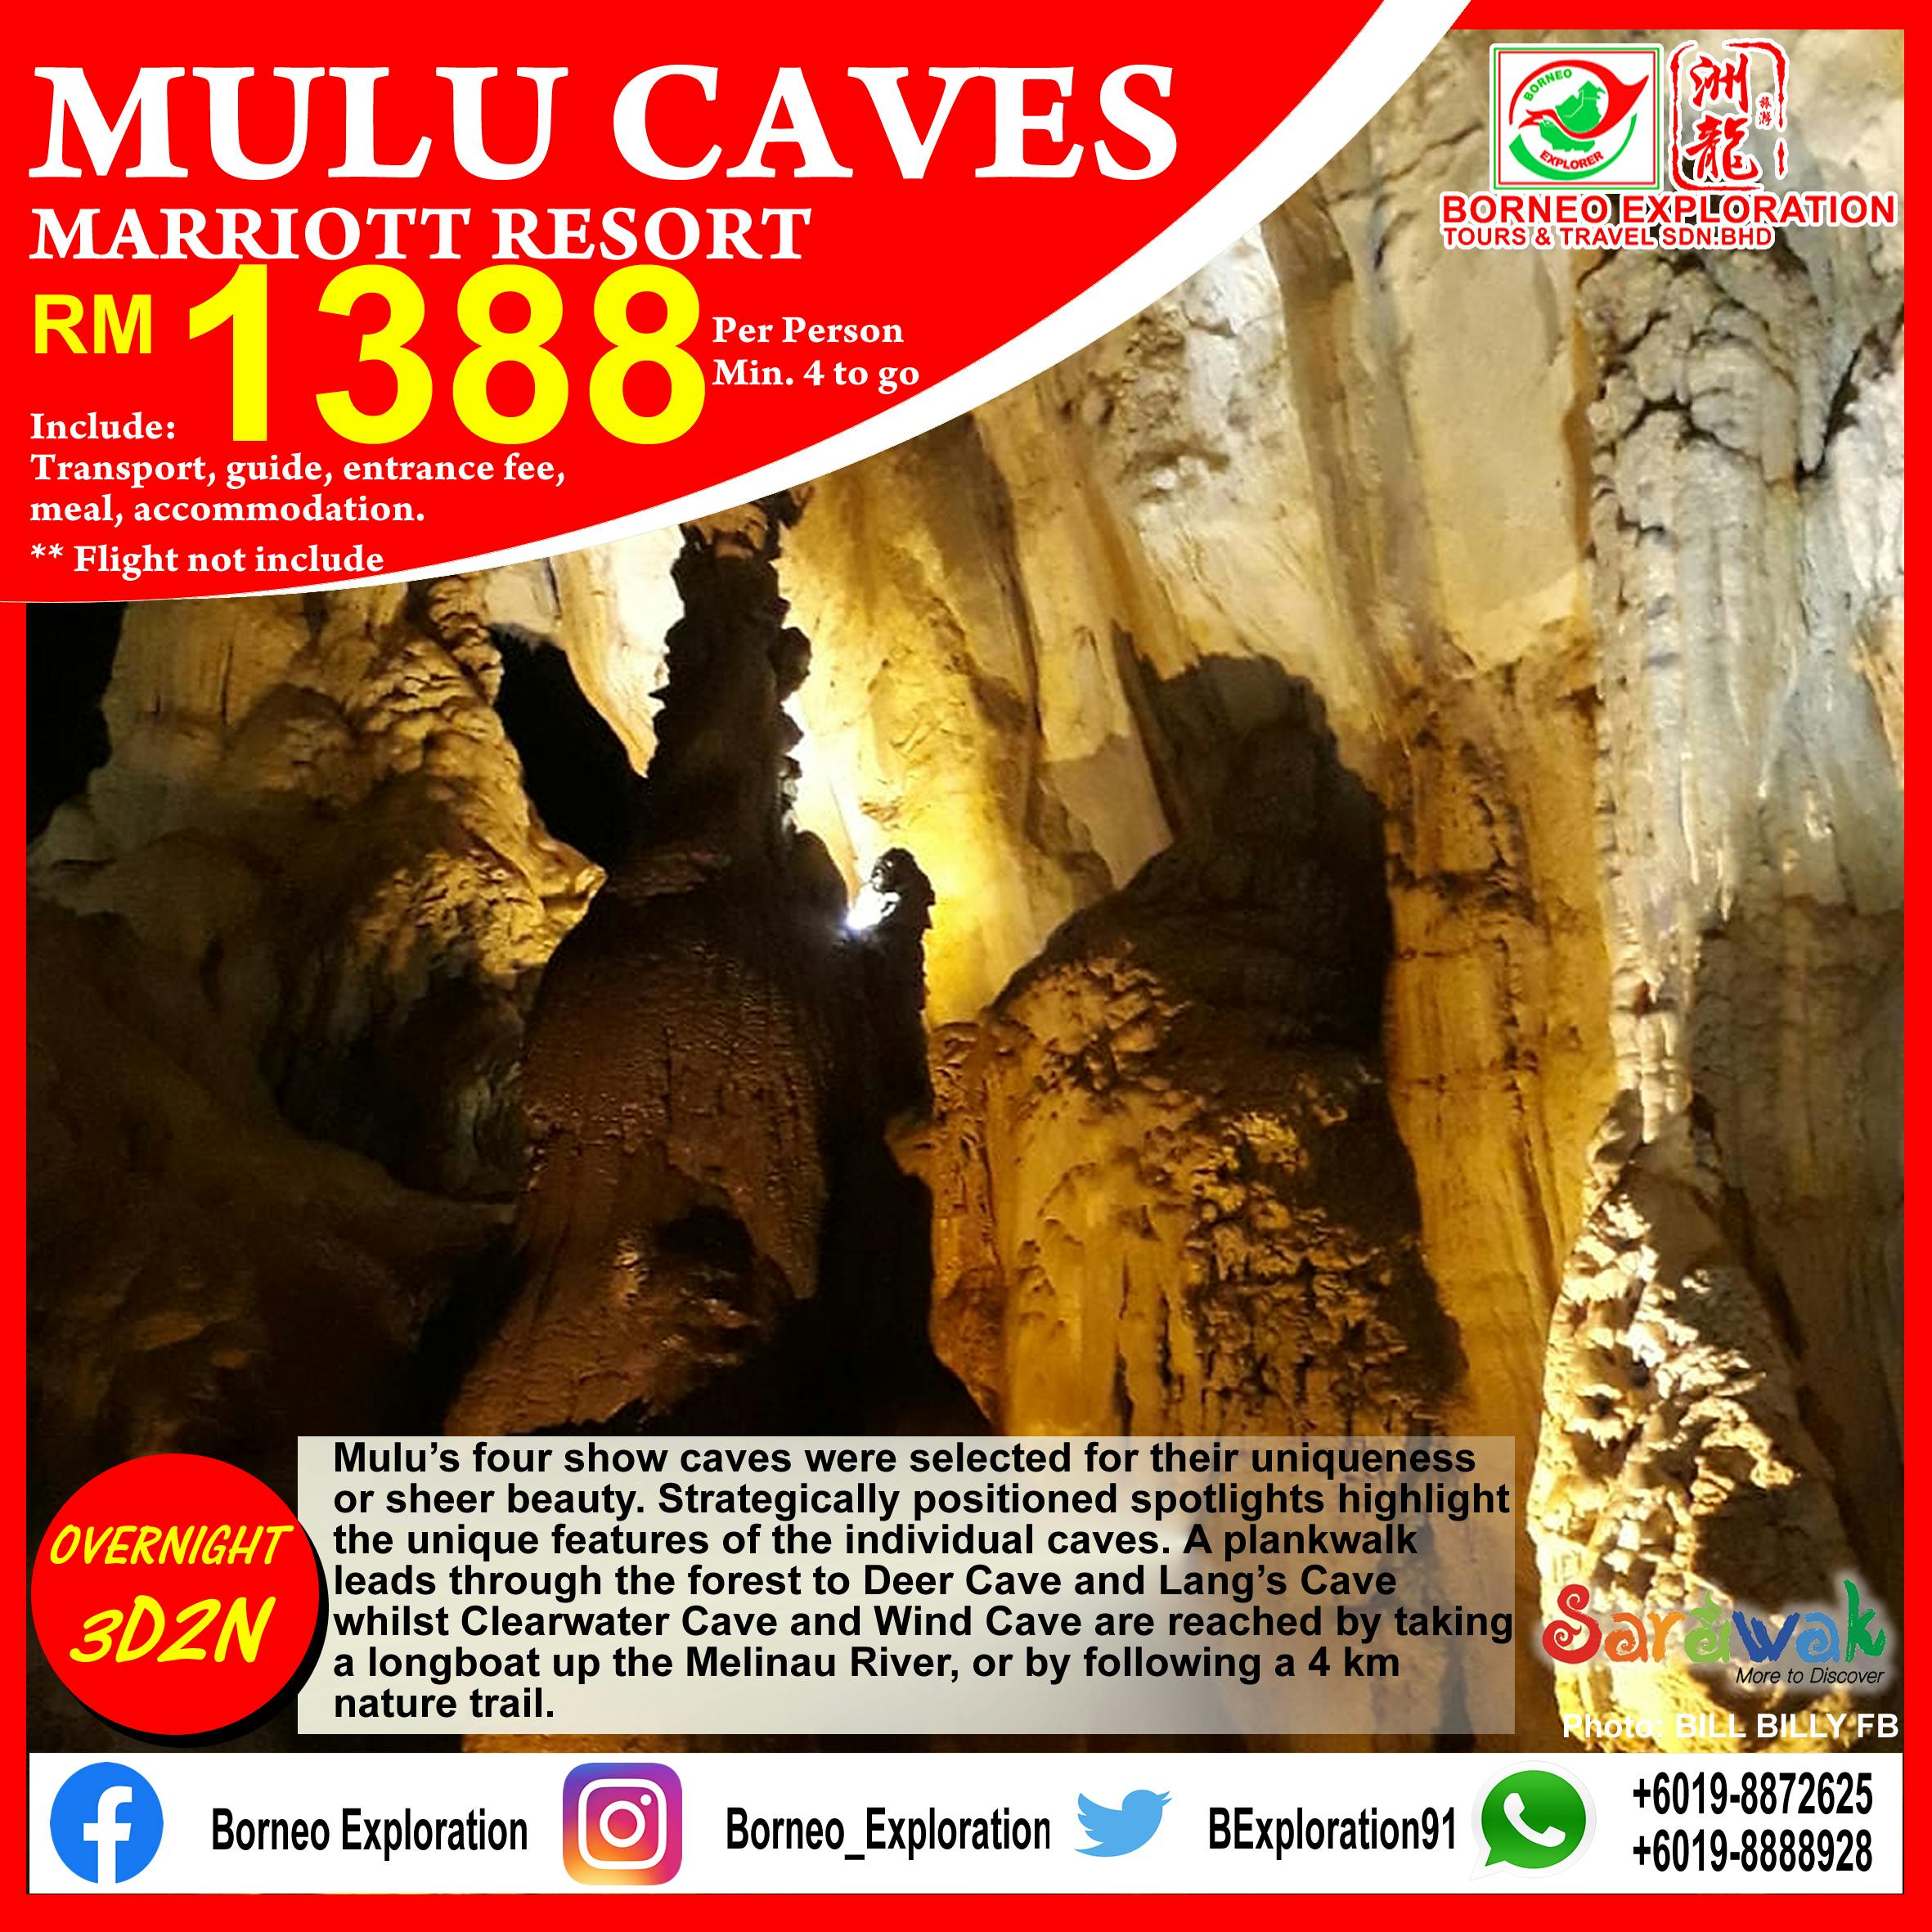 Mulu caves marriot